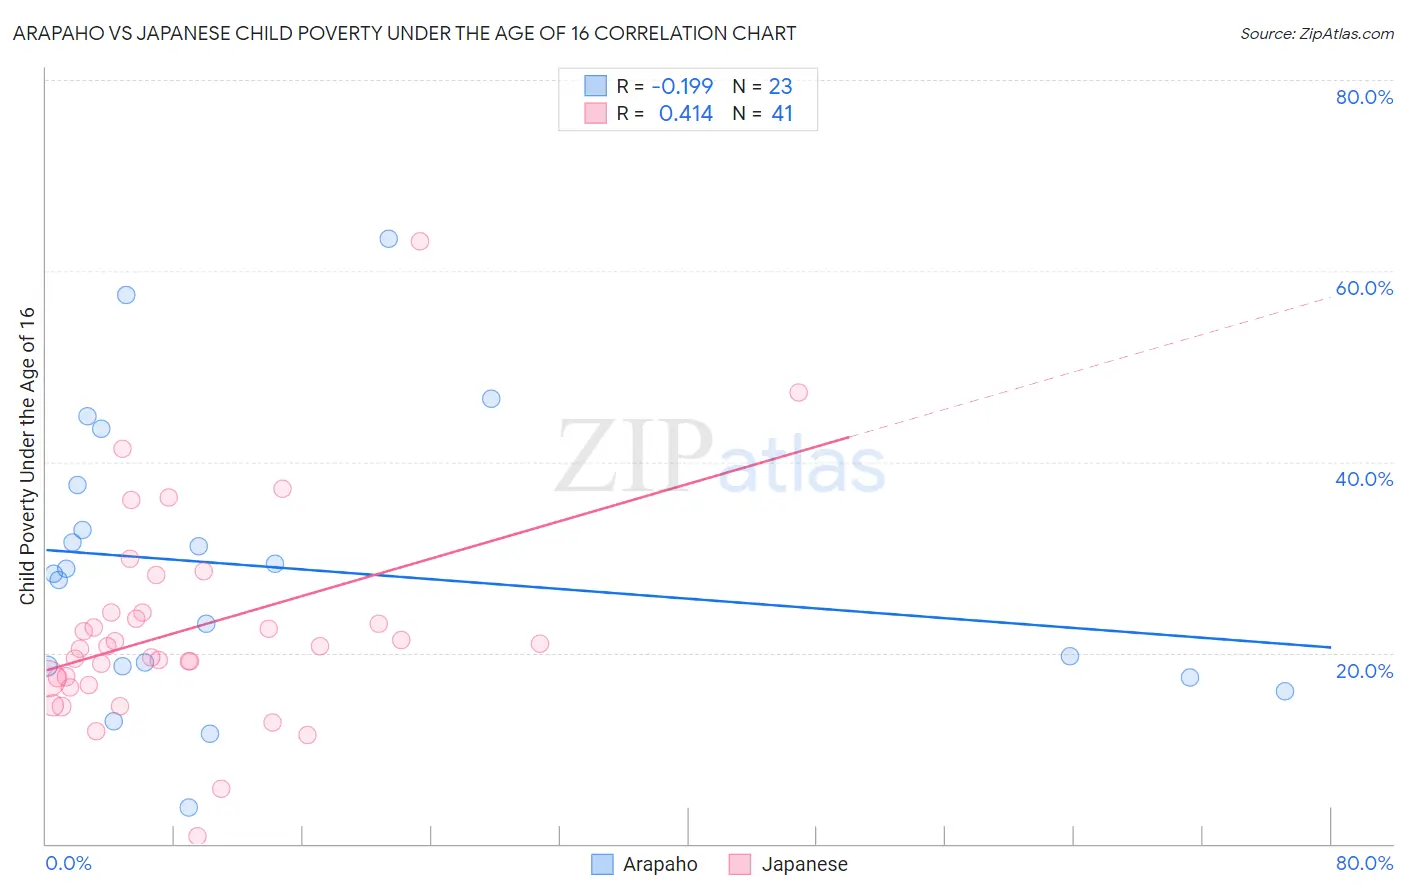 Arapaho vs Japanese Child Poverty Under the Age of 16